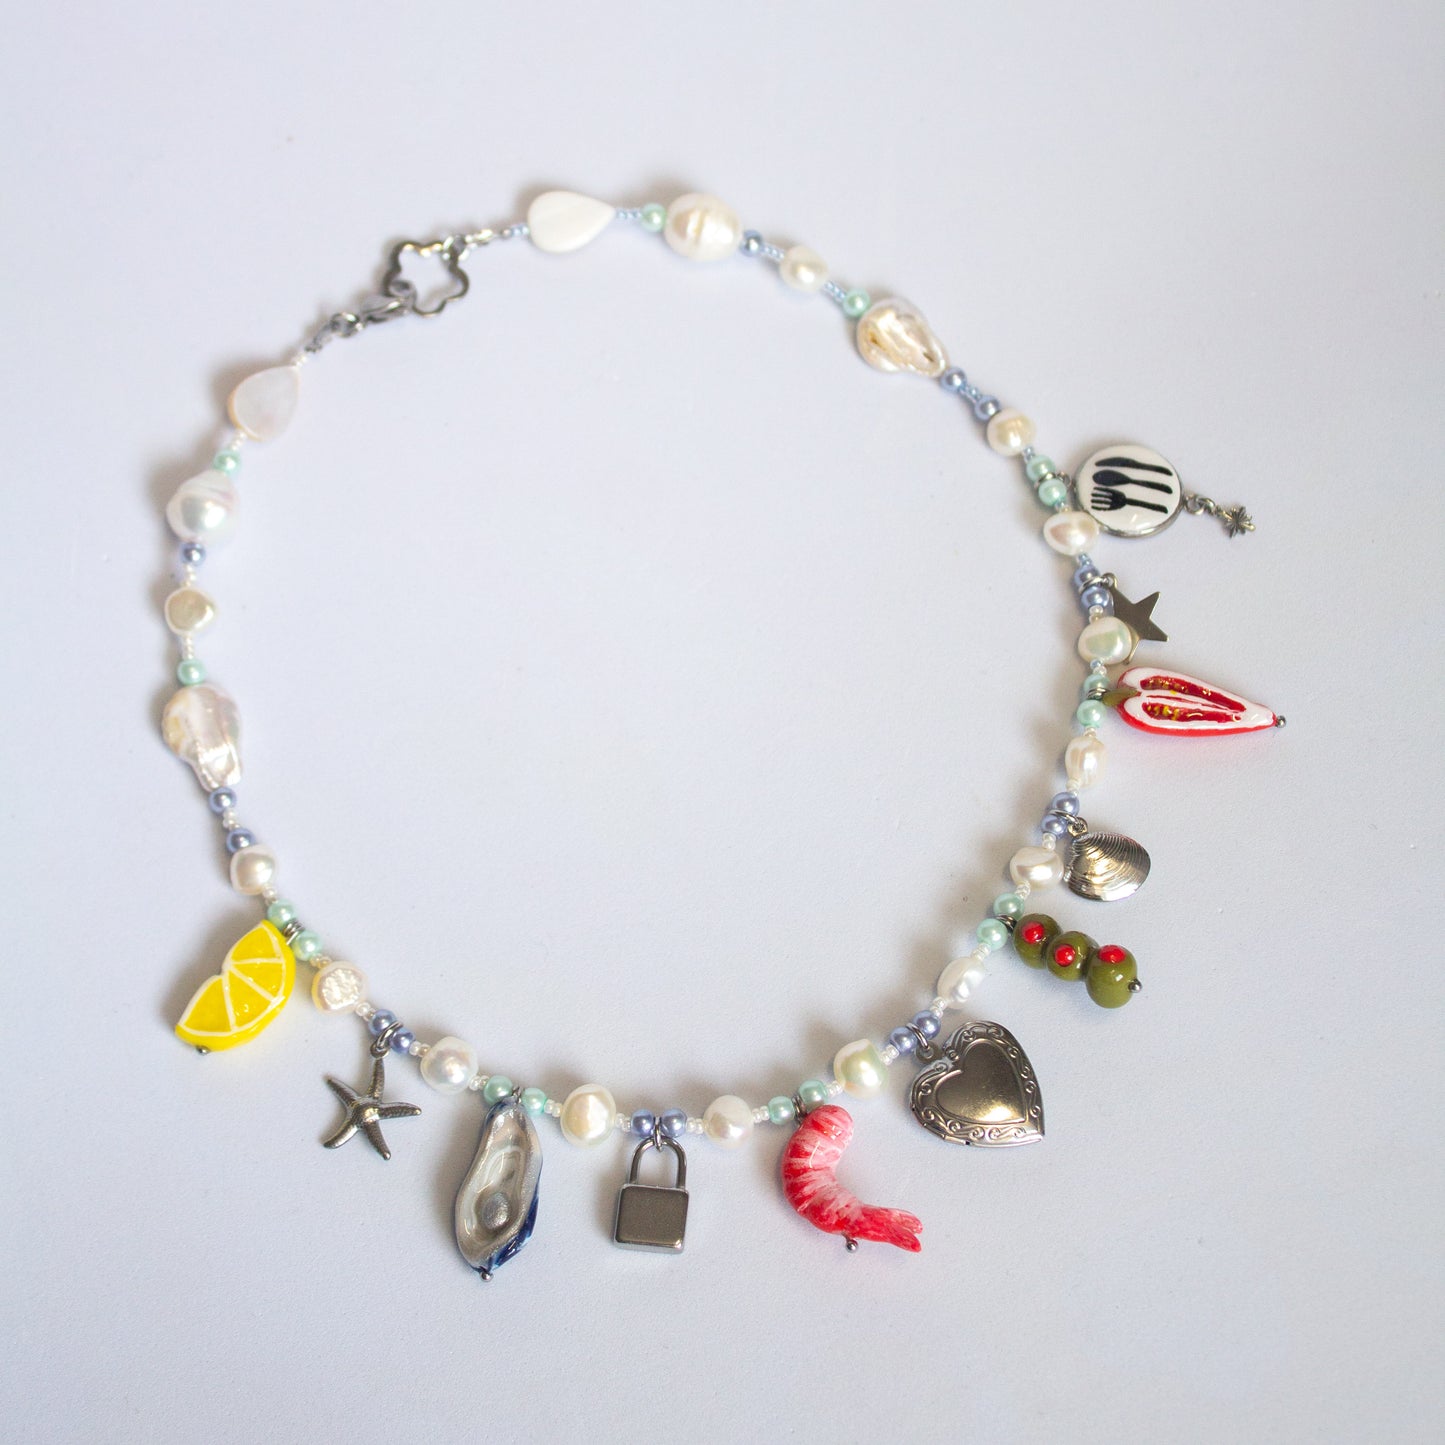 Seababy locket charm necklace